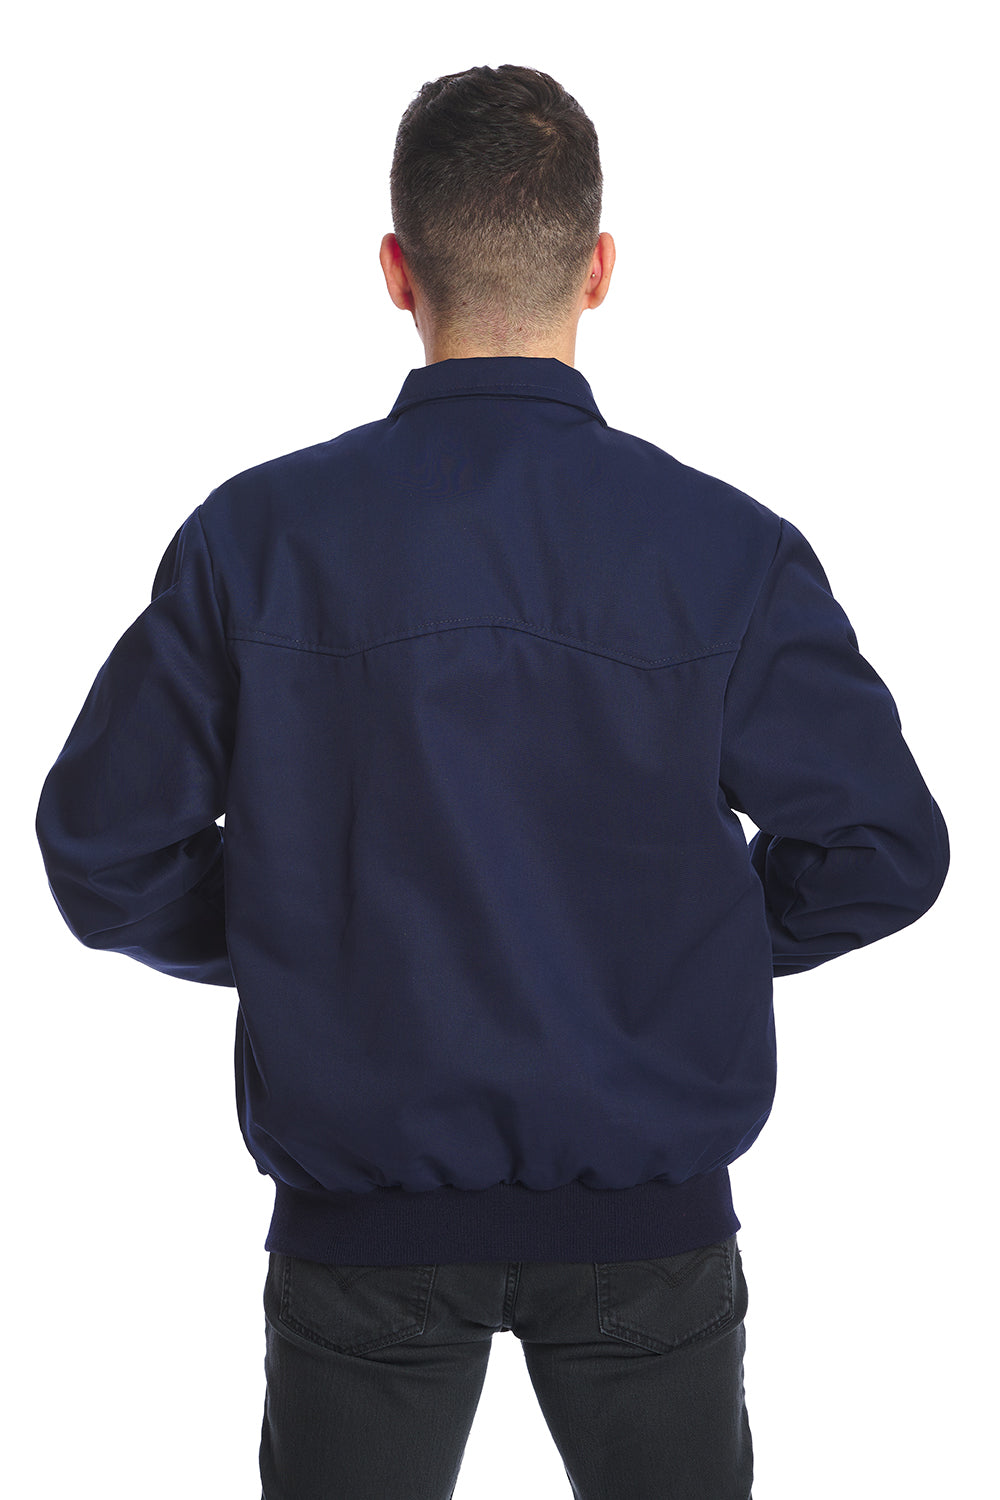 Banned Alternative Unisex Harrington Jacket